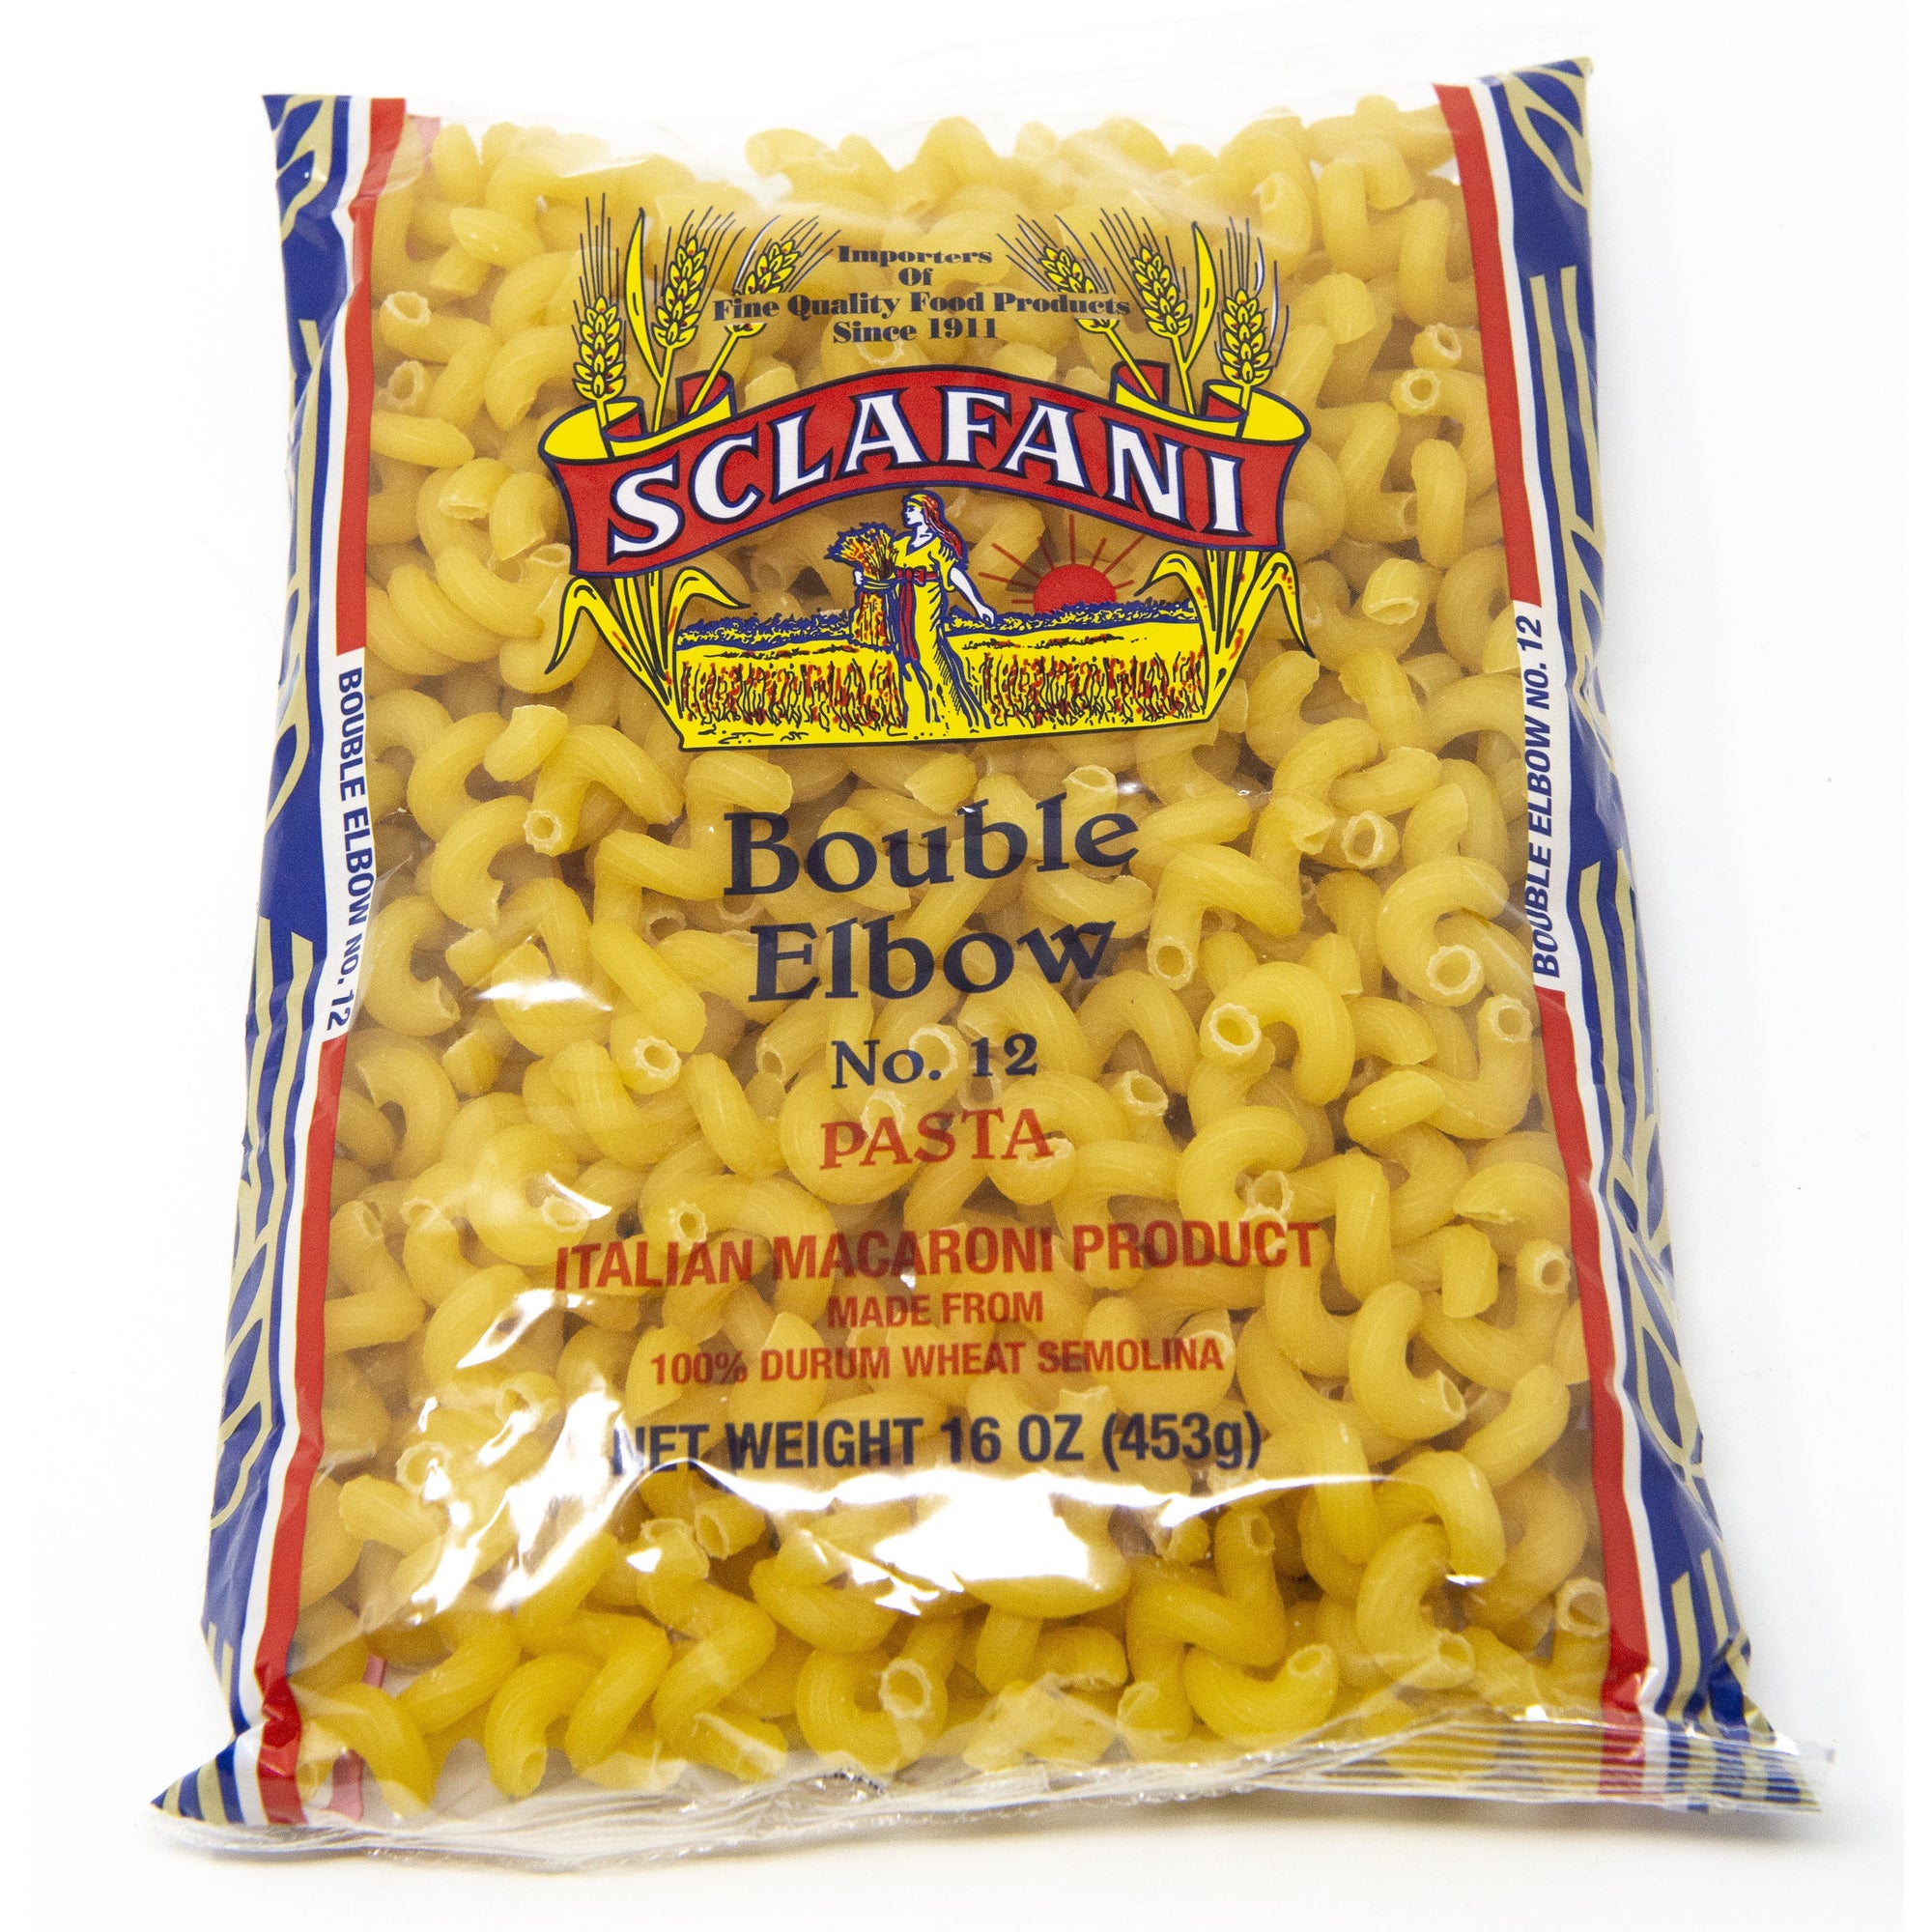 Sclafani Pasta #12 Bouble Elbow 1 lb.